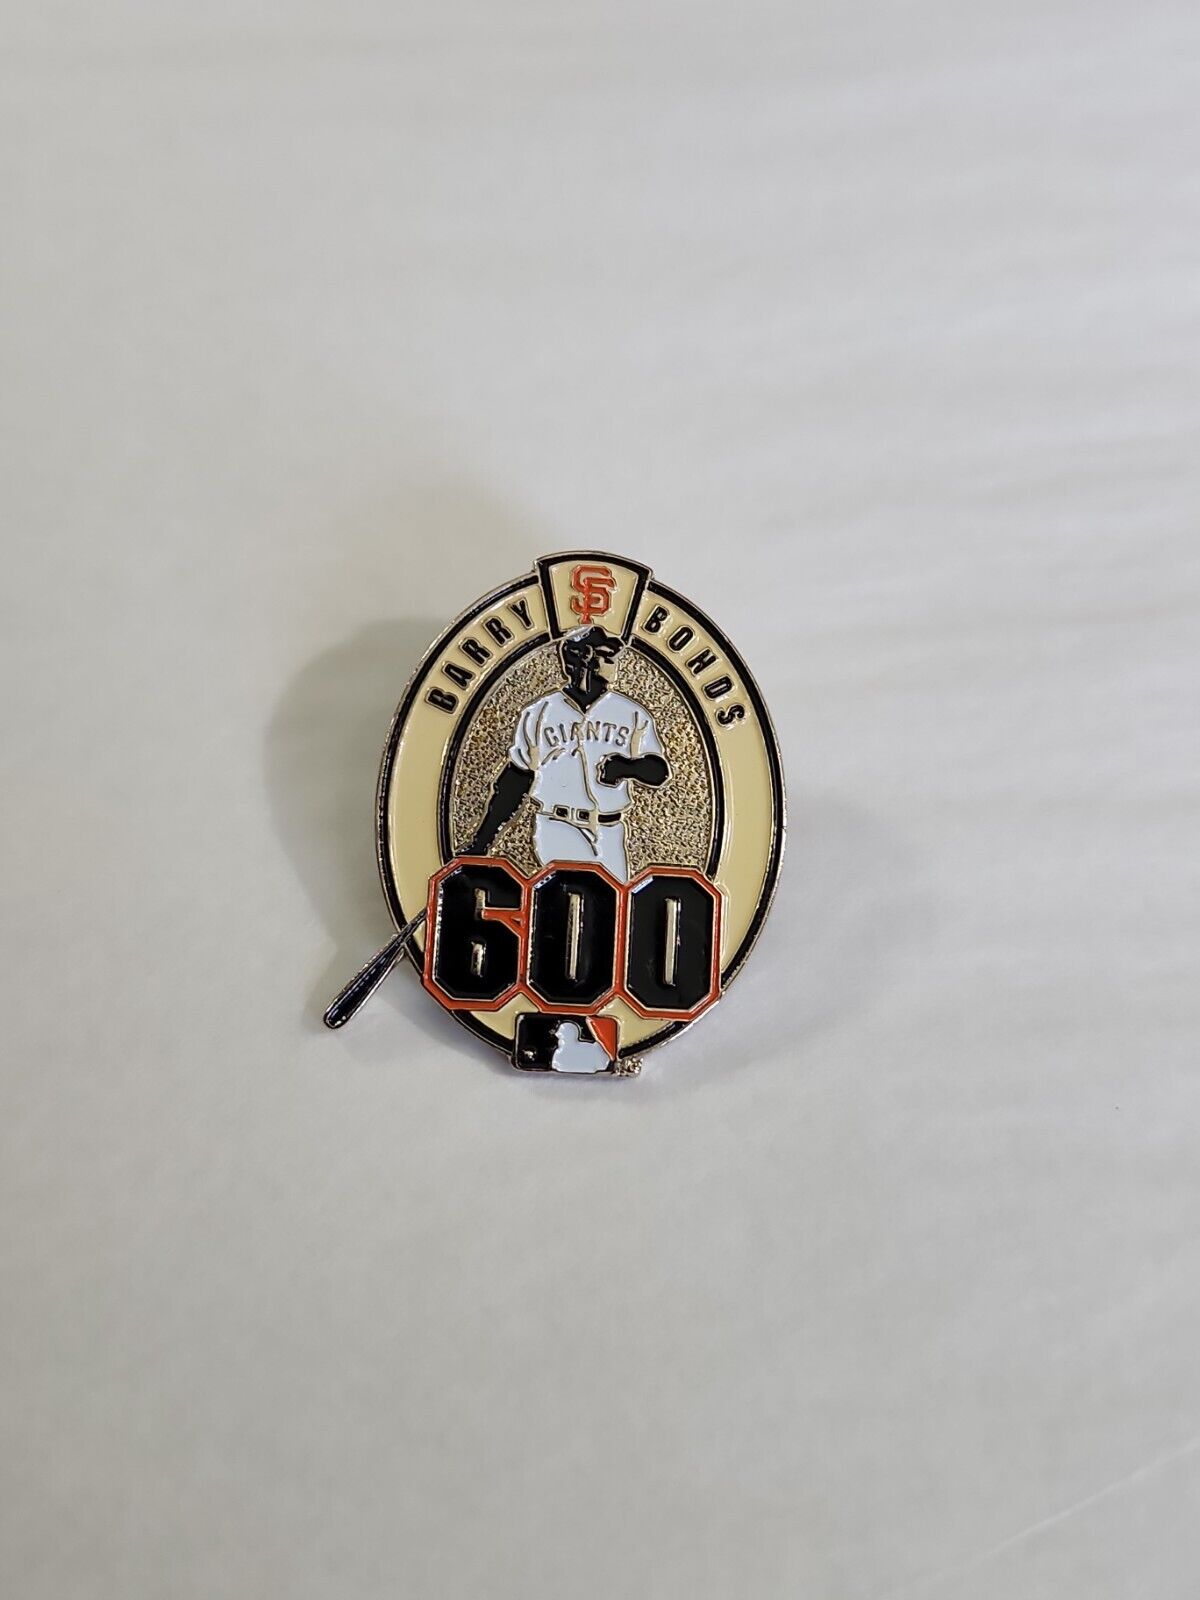 Barry Bonds 600 Lapel Hat Jacket Pin MLB San Francisco Baseball